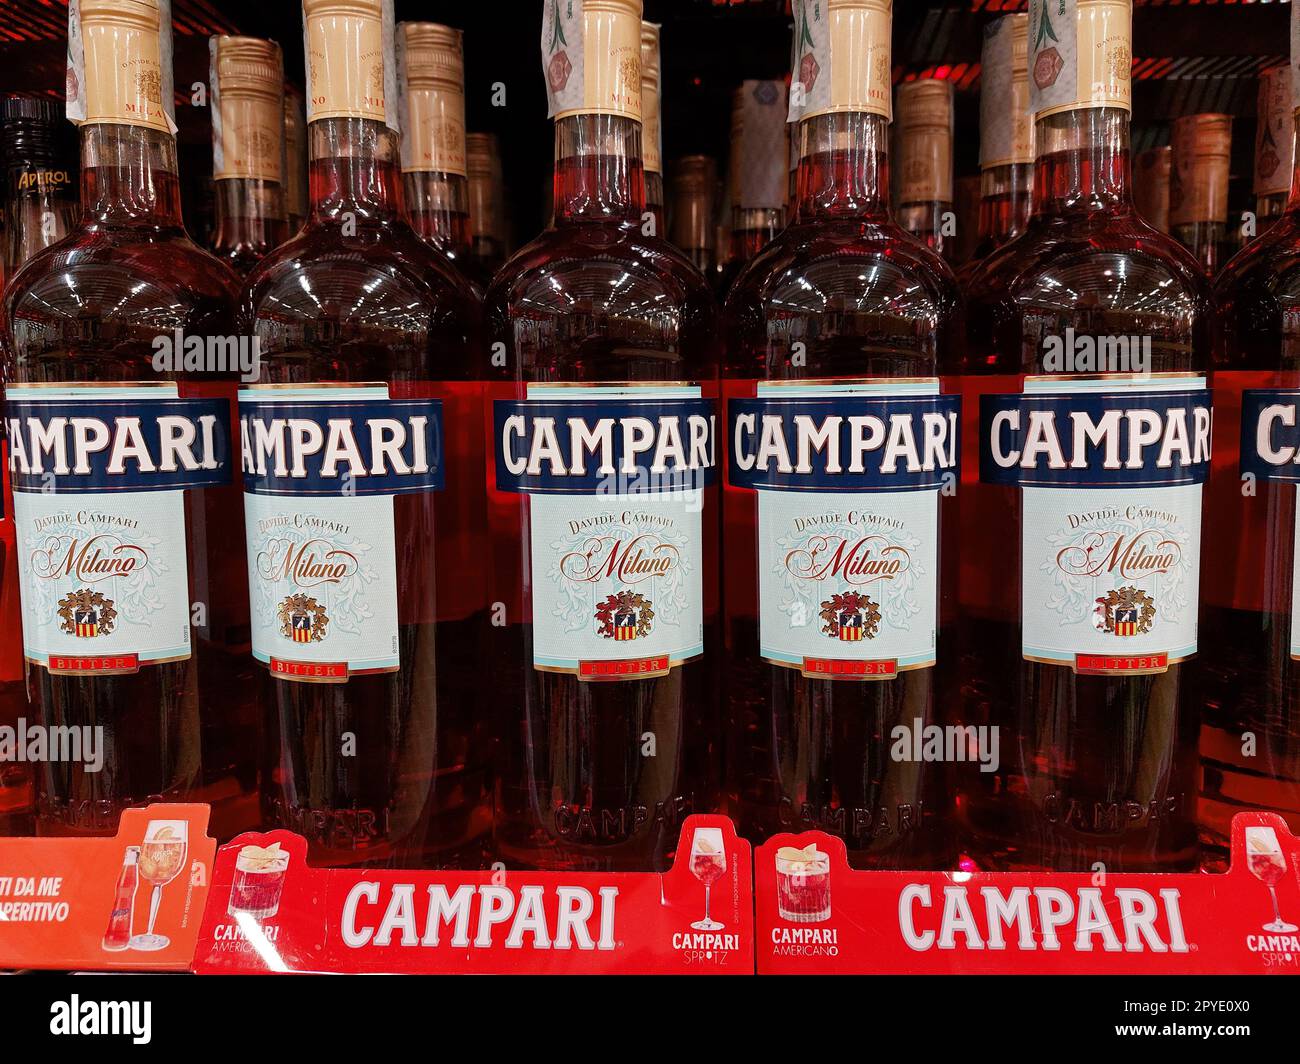 Campari bottles in a supermarket Stock Photo